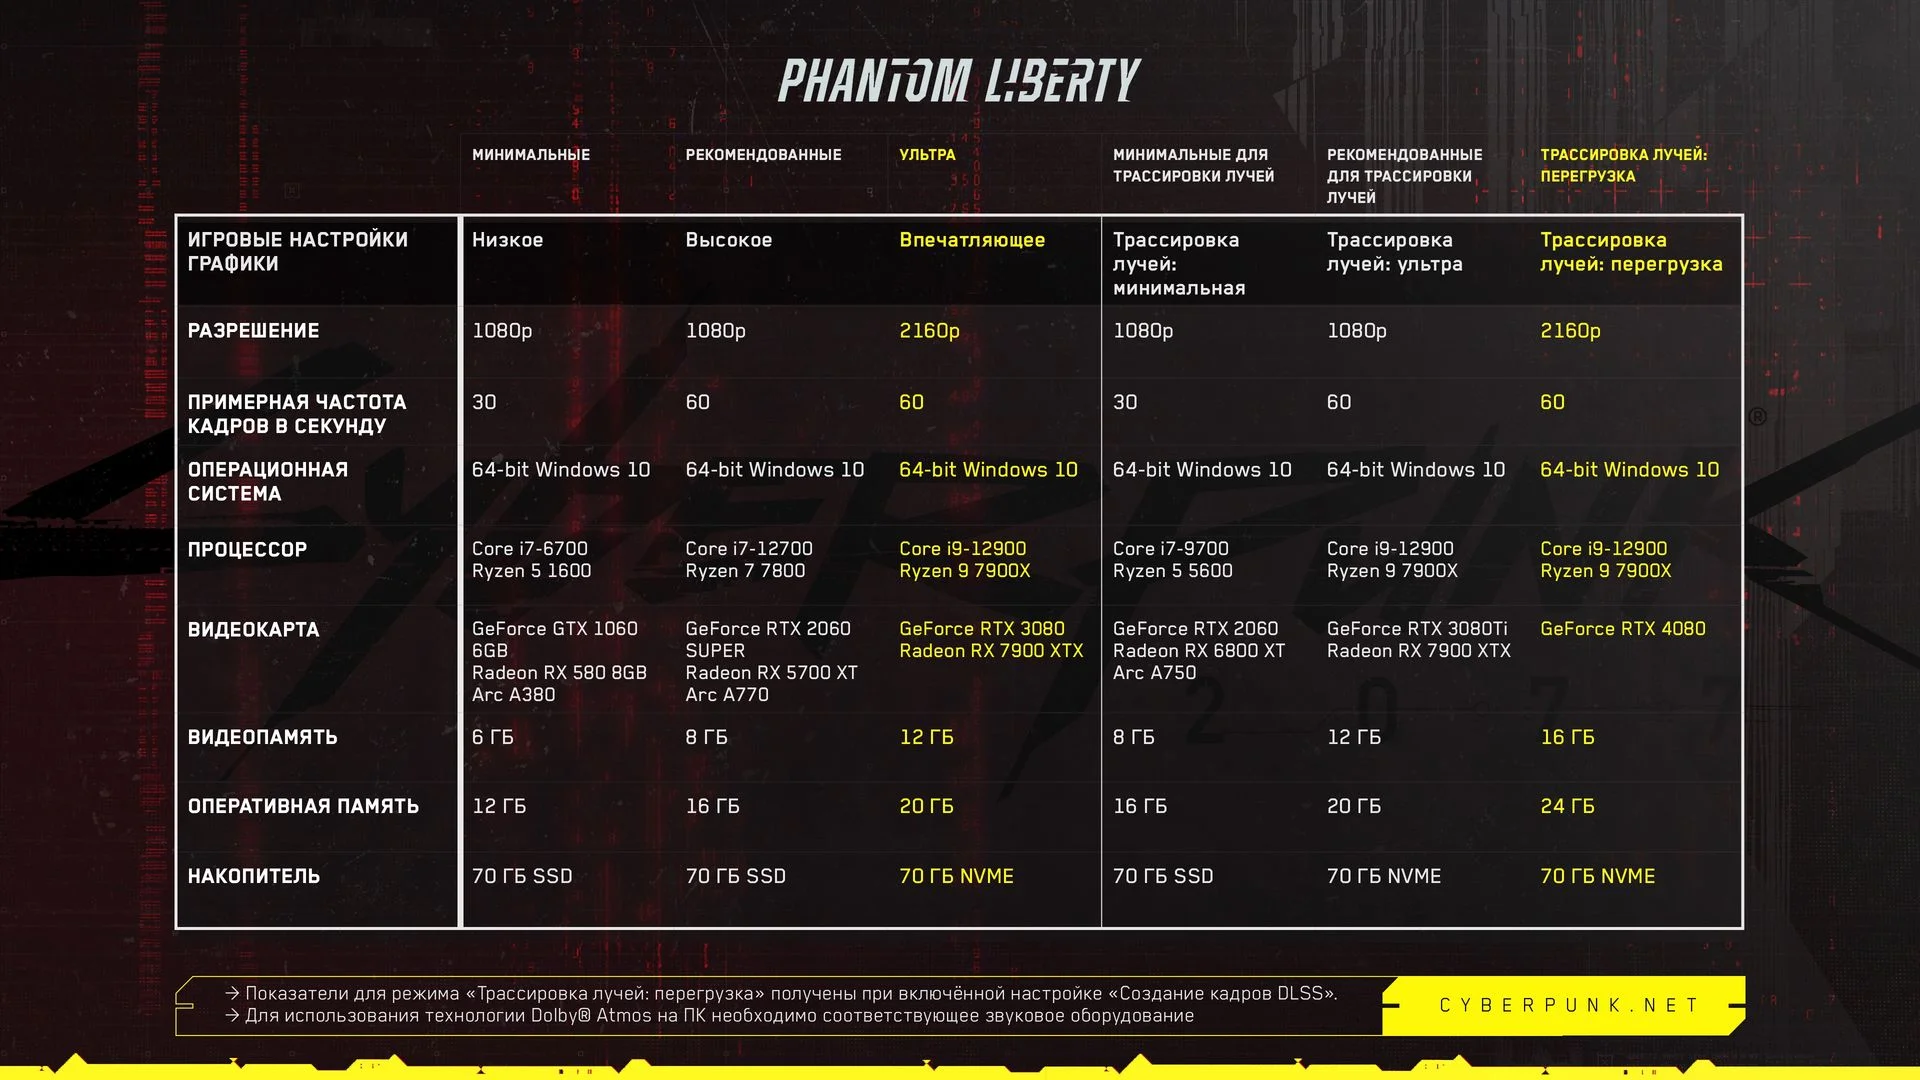 Cyberpunk 2077 Phantom Liberty потребует не менее 12 ГБ ОЗУ и 6 ГБ видеопамяти - фото 1